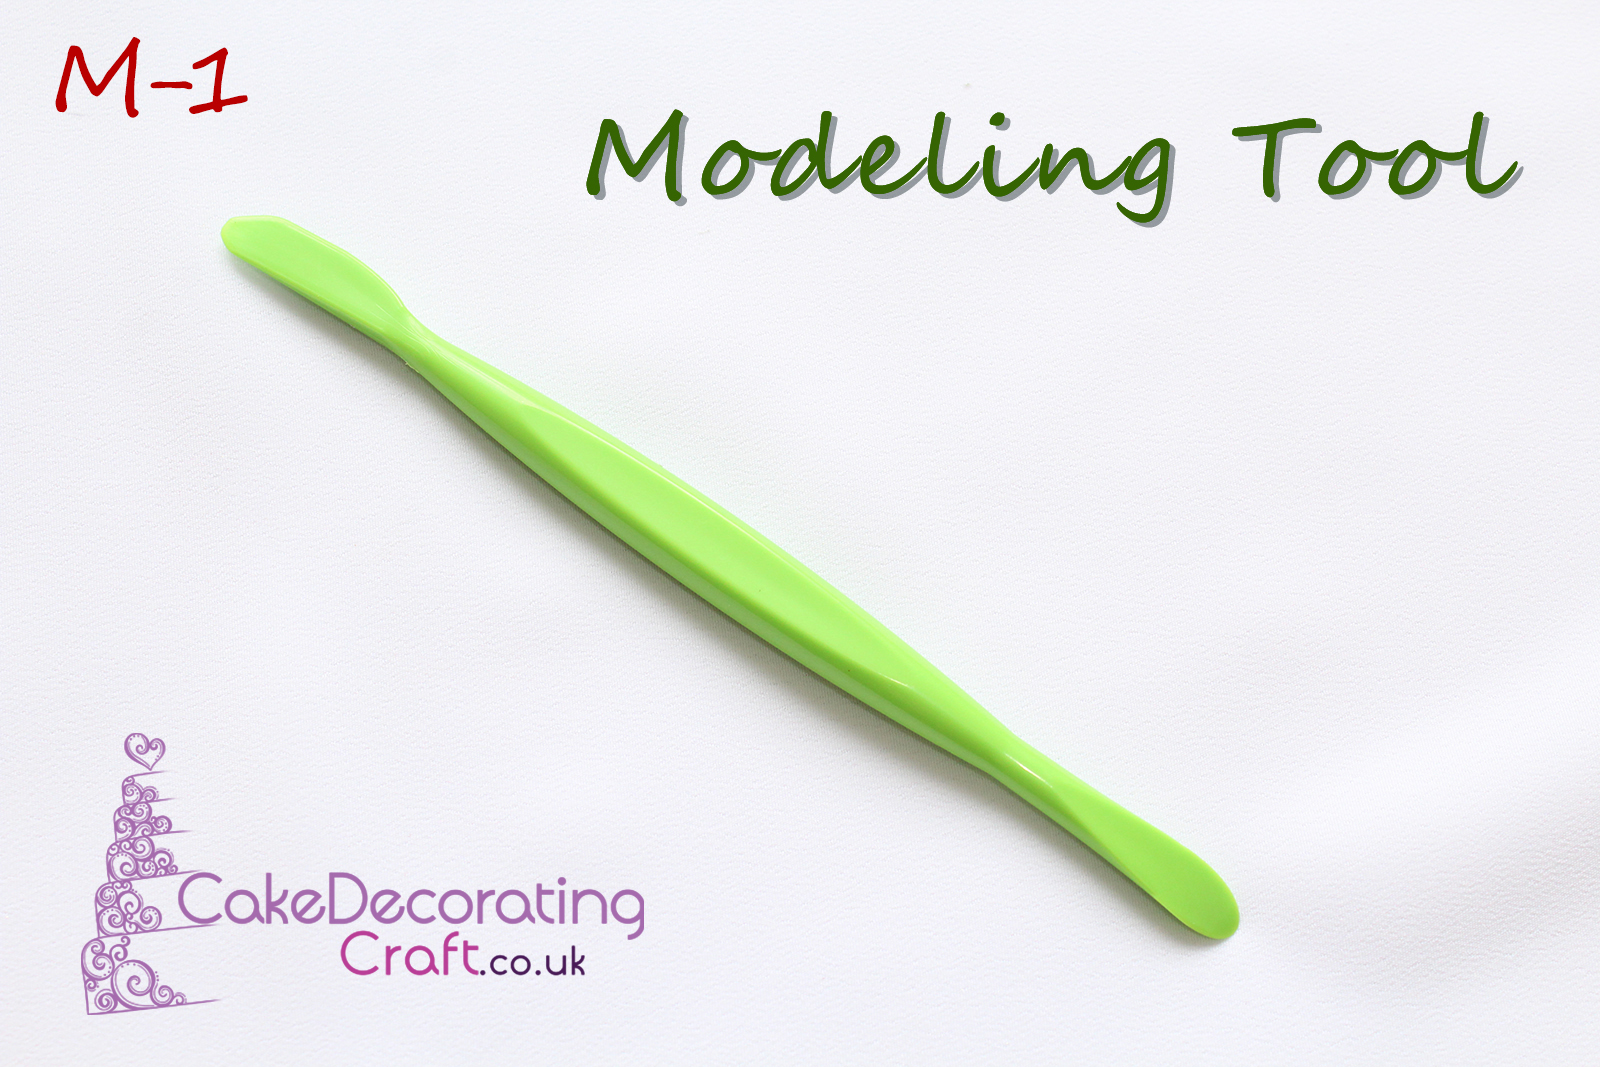 Cake Decorating Craft Modelling Tools | Double Ended | Gum Paste Flower Paste Modelling Sugar Paste Craft | M-1